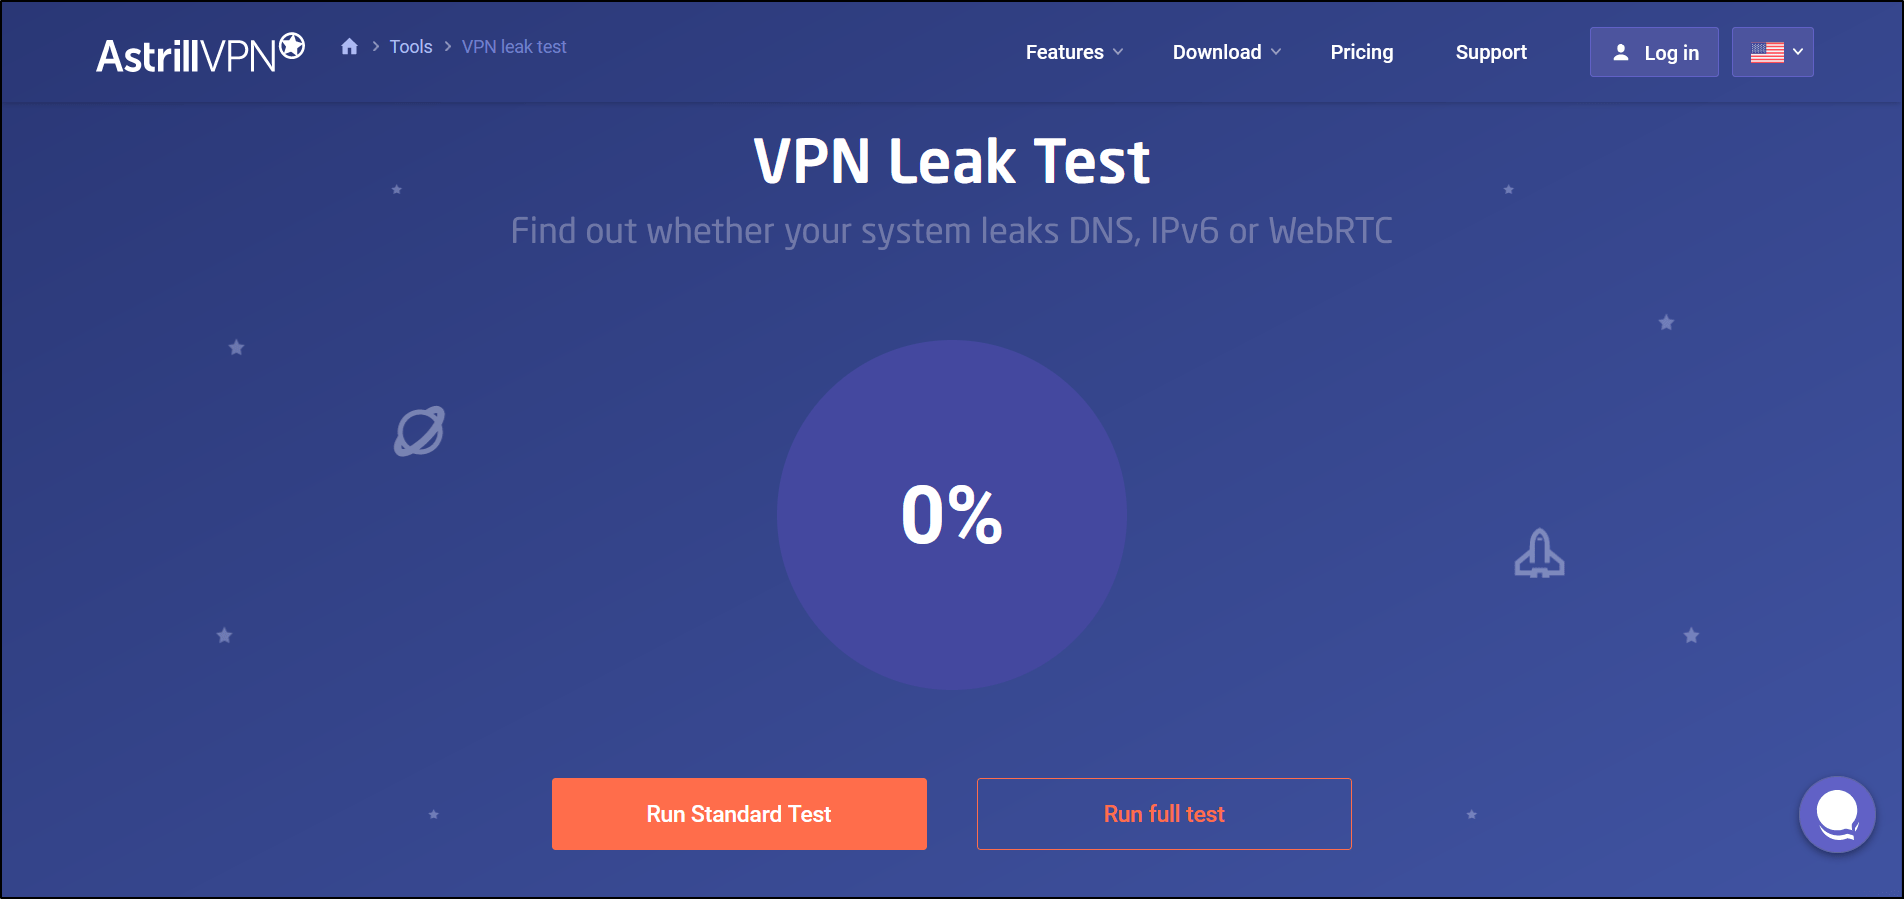 test for VPN leaks through astrill vpn leak test if Netflix not working with VPN or proxy error